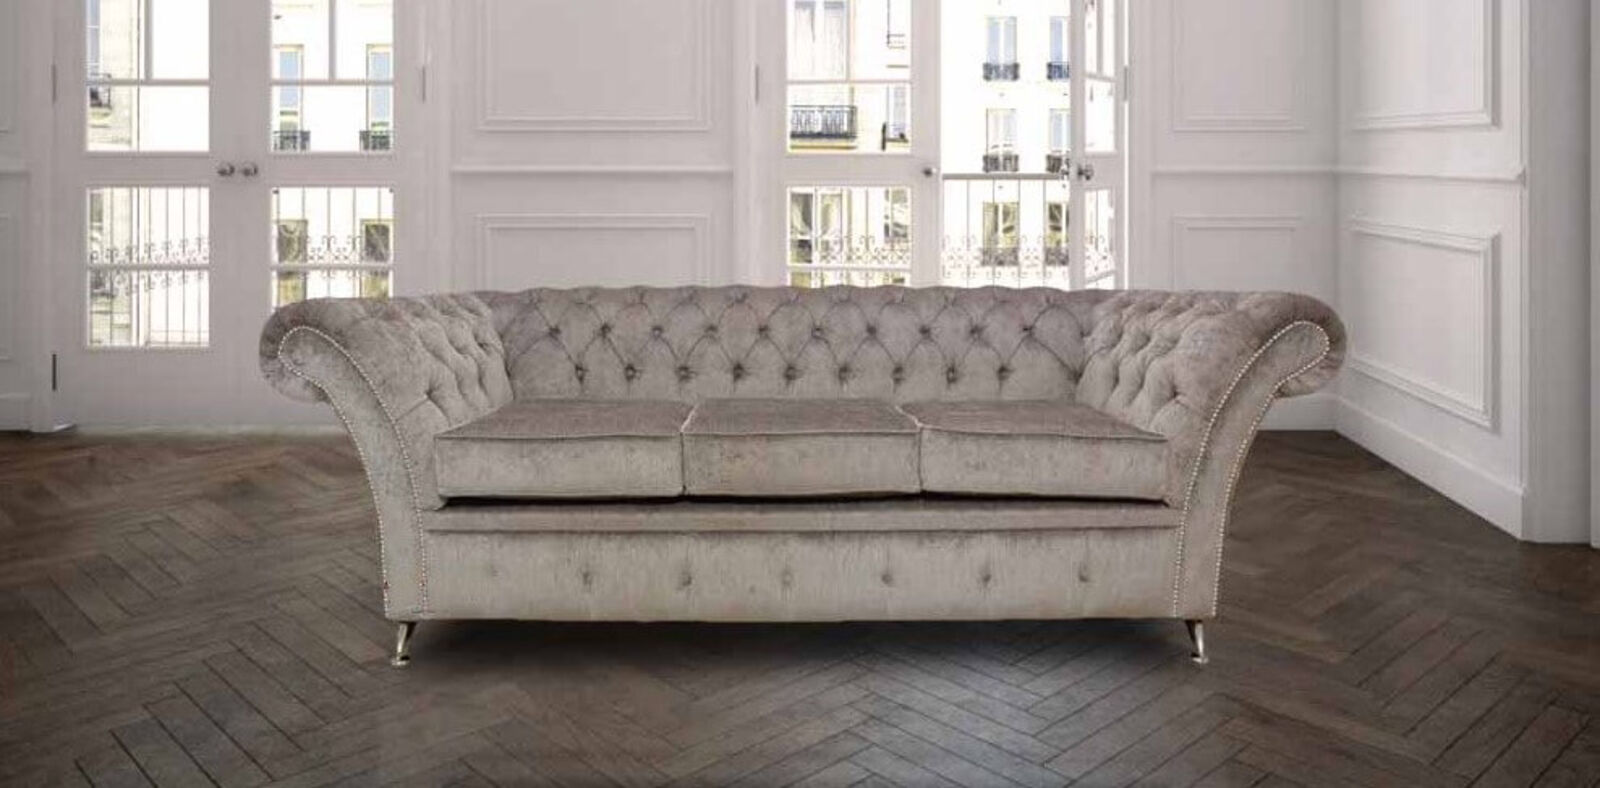 Product photograph of Chesterfield Cambridge 3 Seater Sofa Settee Perla Illusions Grey Fabric Chrome Feet Studding from Designer Sofas 4U